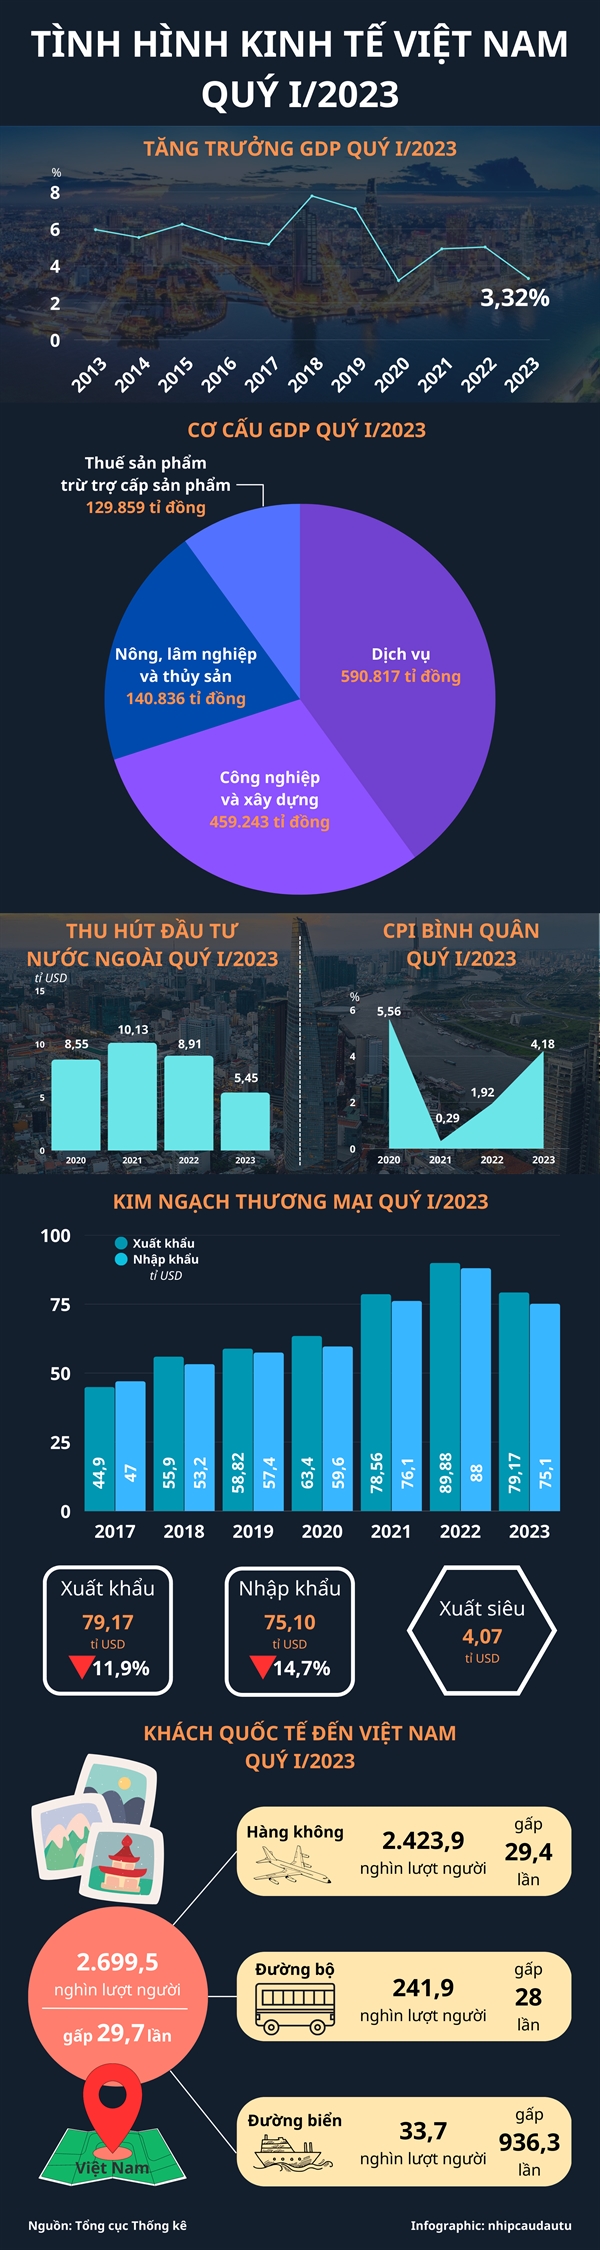 [Infographic] Tinh hinh kinh te Viet Nam quy I/2023